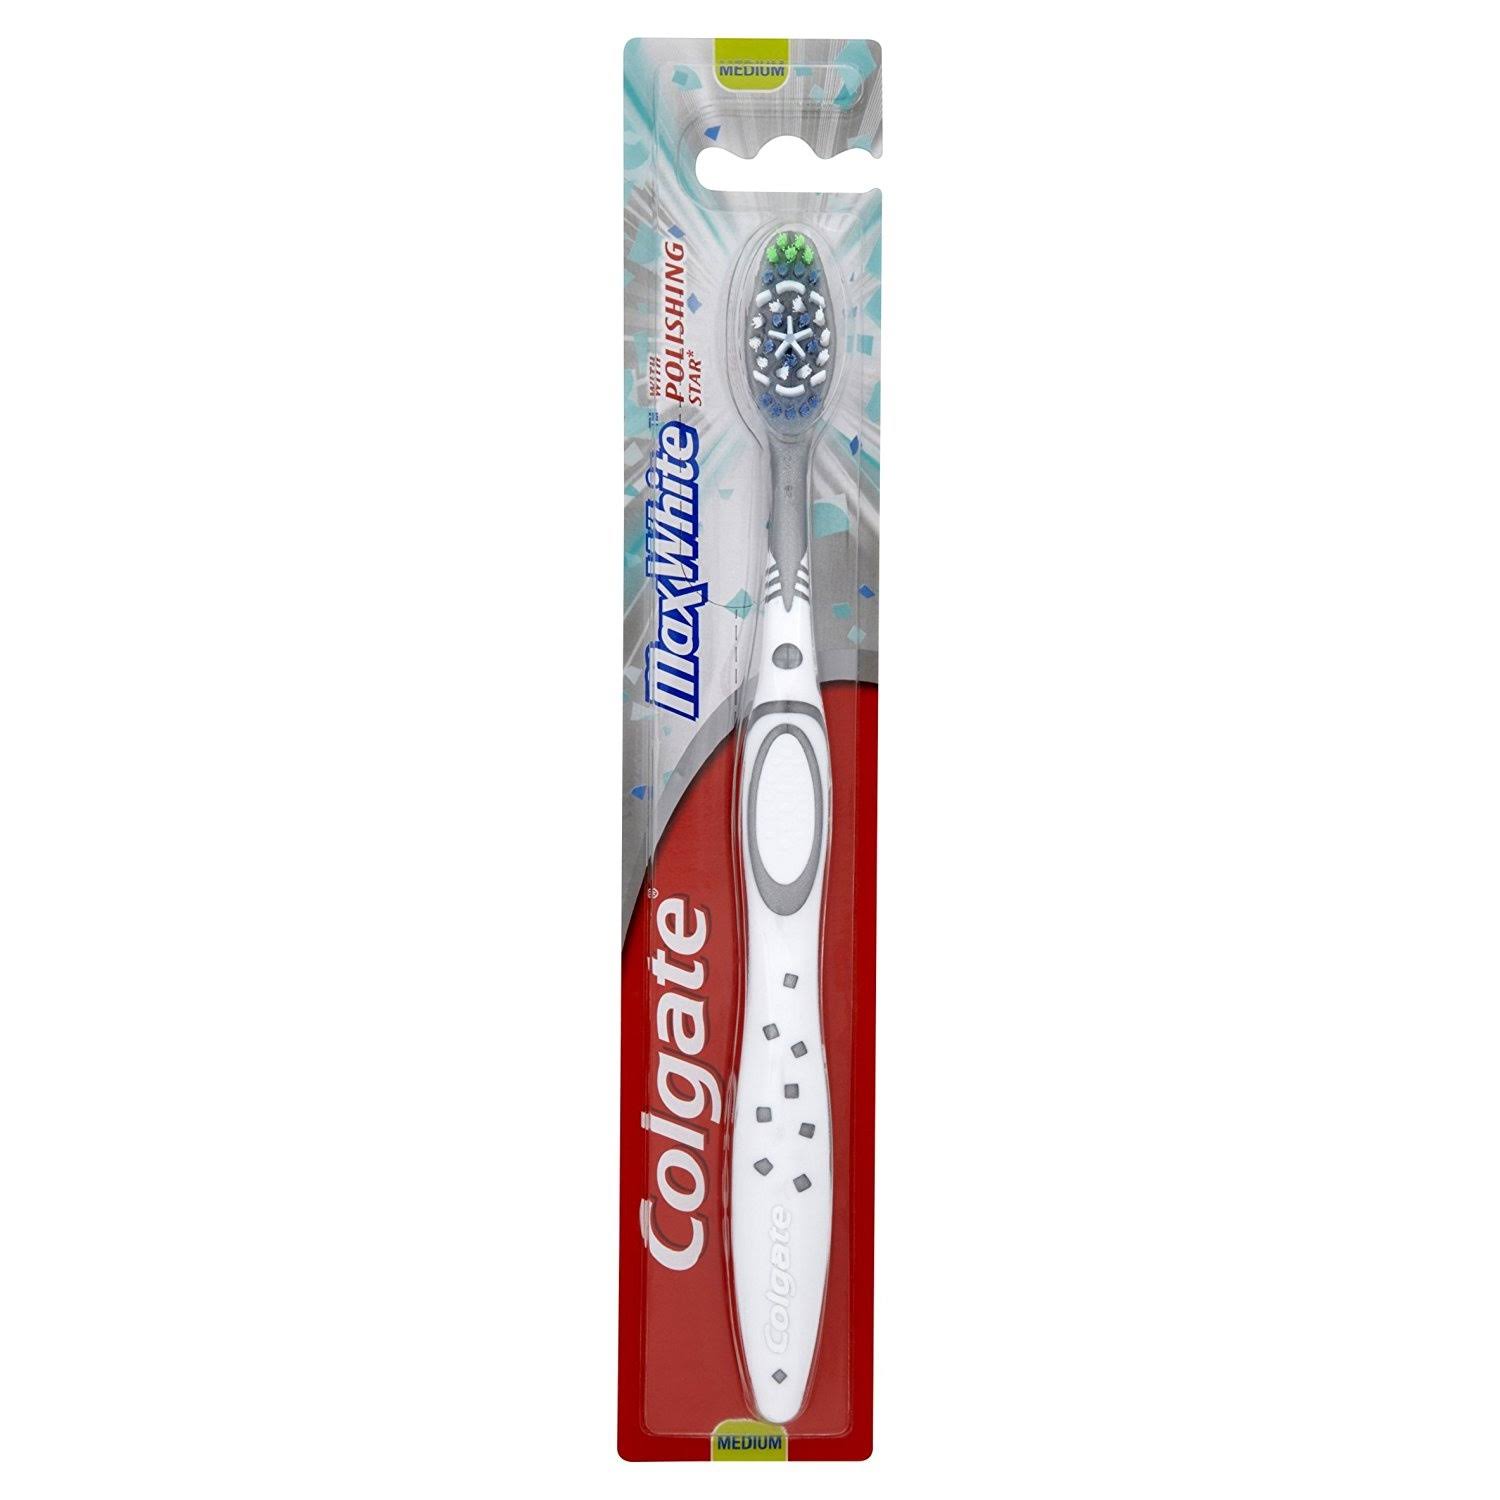 Colgate Max White Toothbrush - Medium